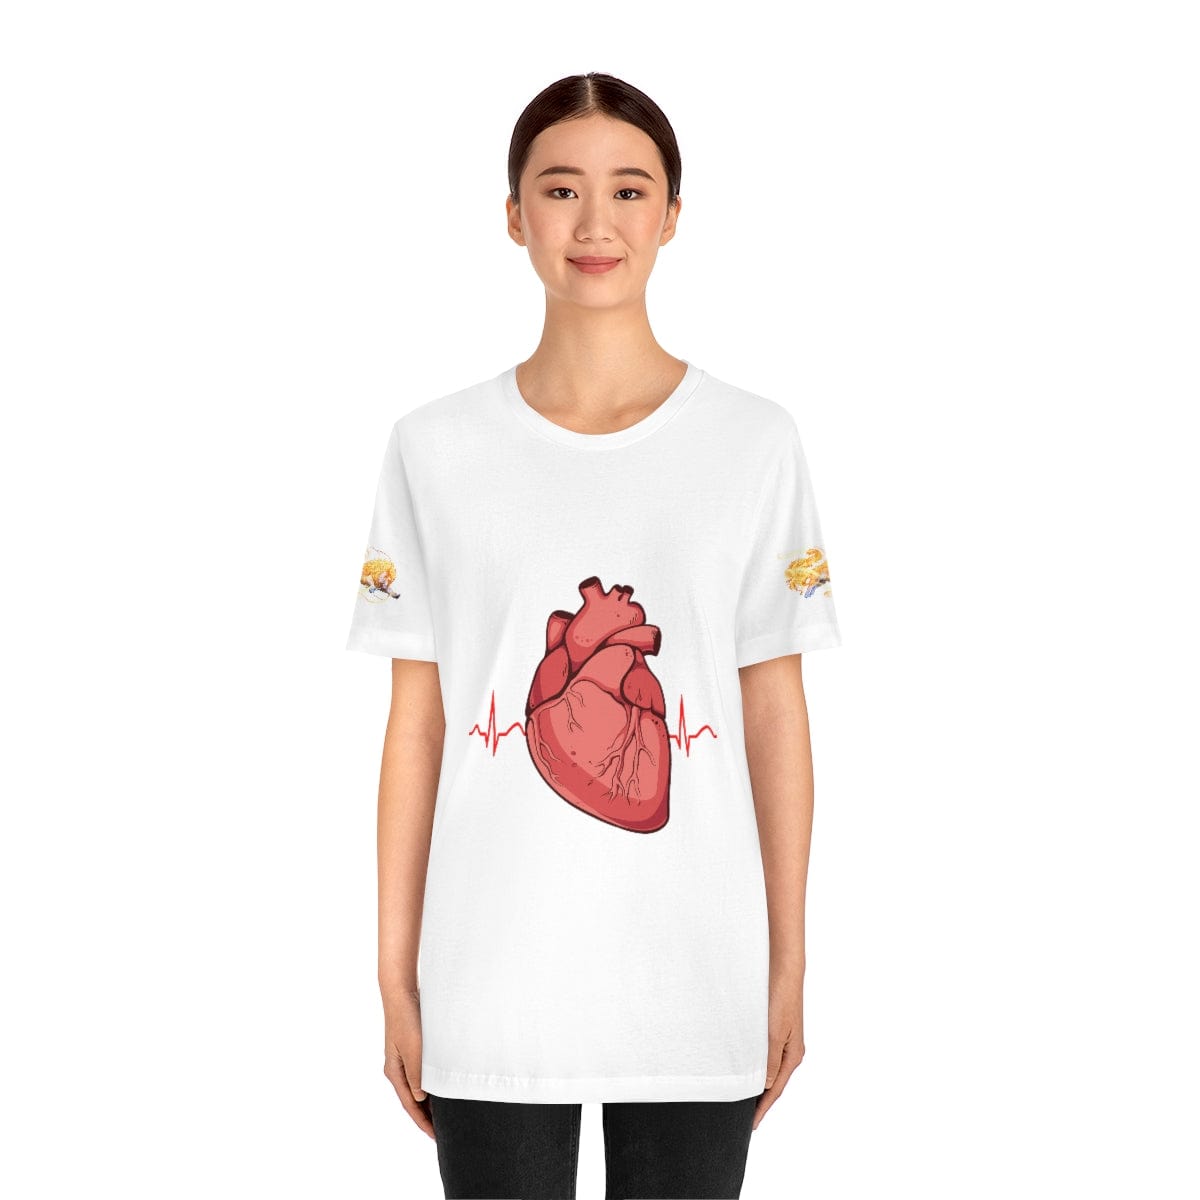 The Vision Slayer Heart Wave Celestial Lion White T-Shirt